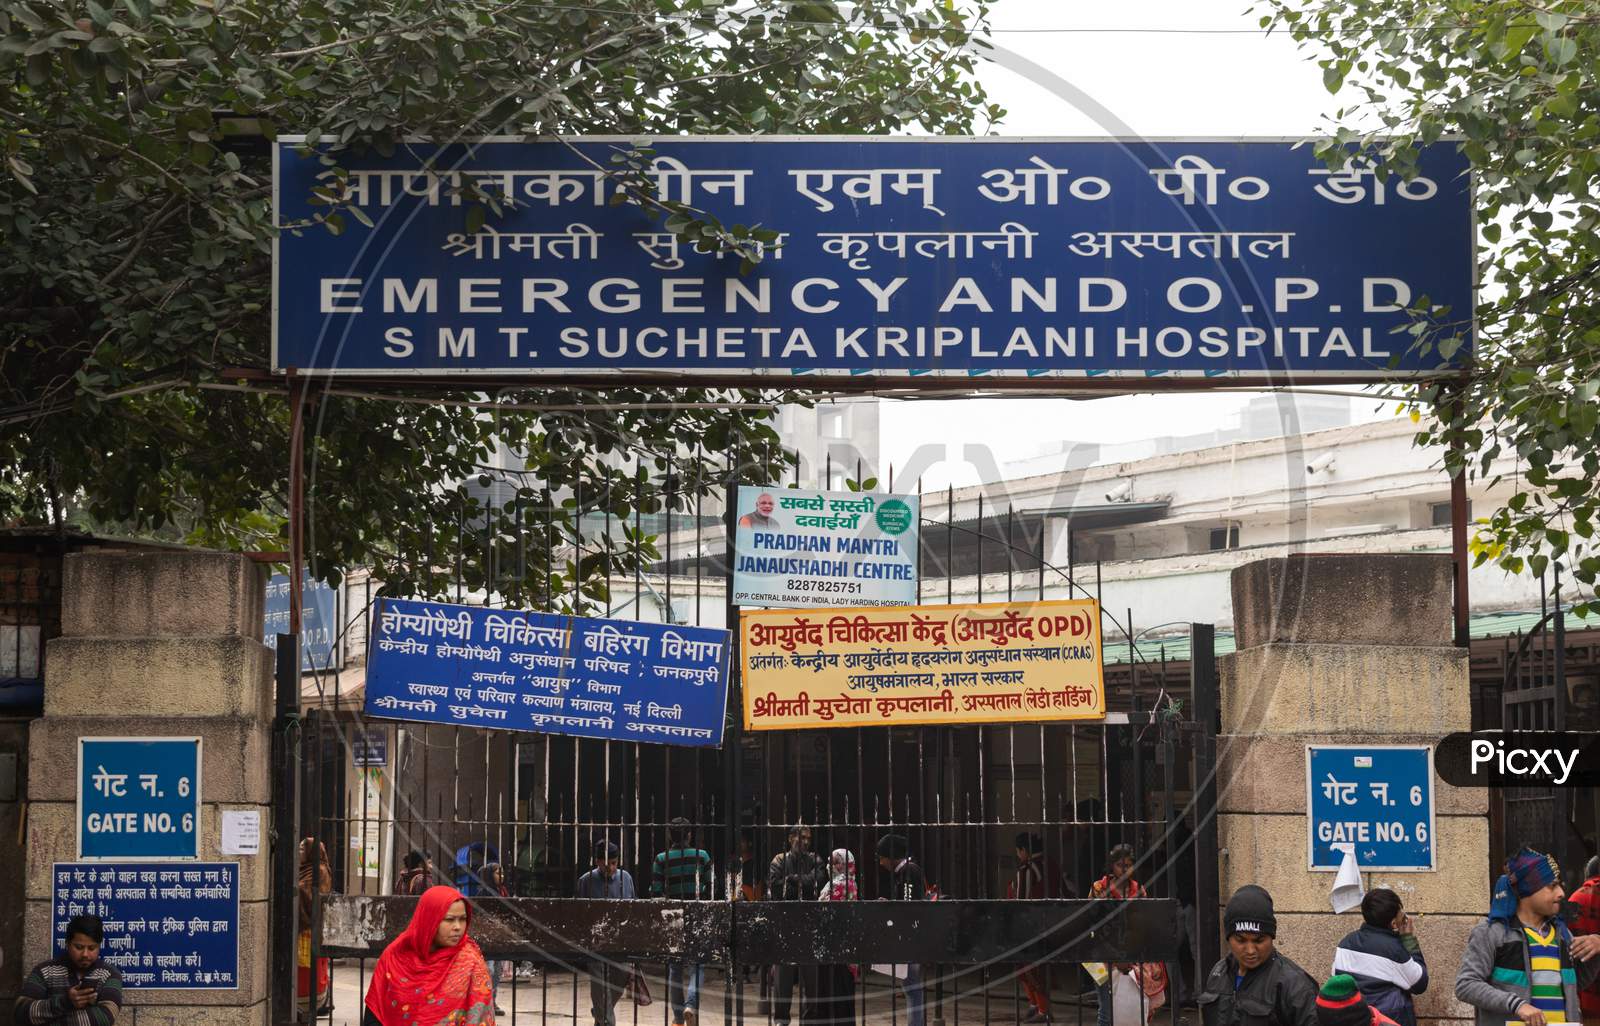 Emergency And OPD of SMT. Sucheta Kriplani Hospital